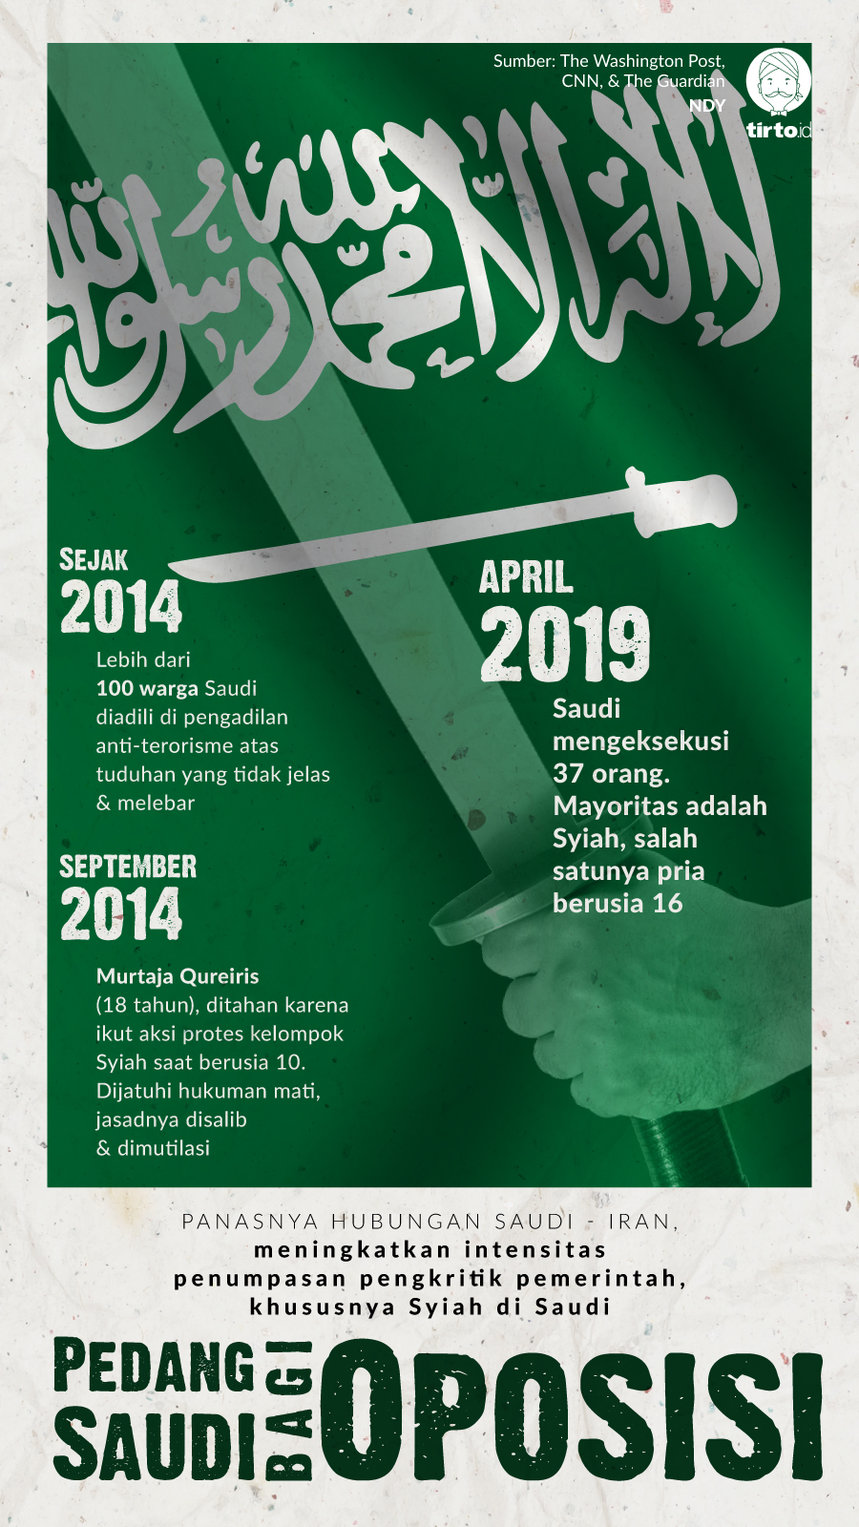 Infografik Pedang saudi bagi oposisi